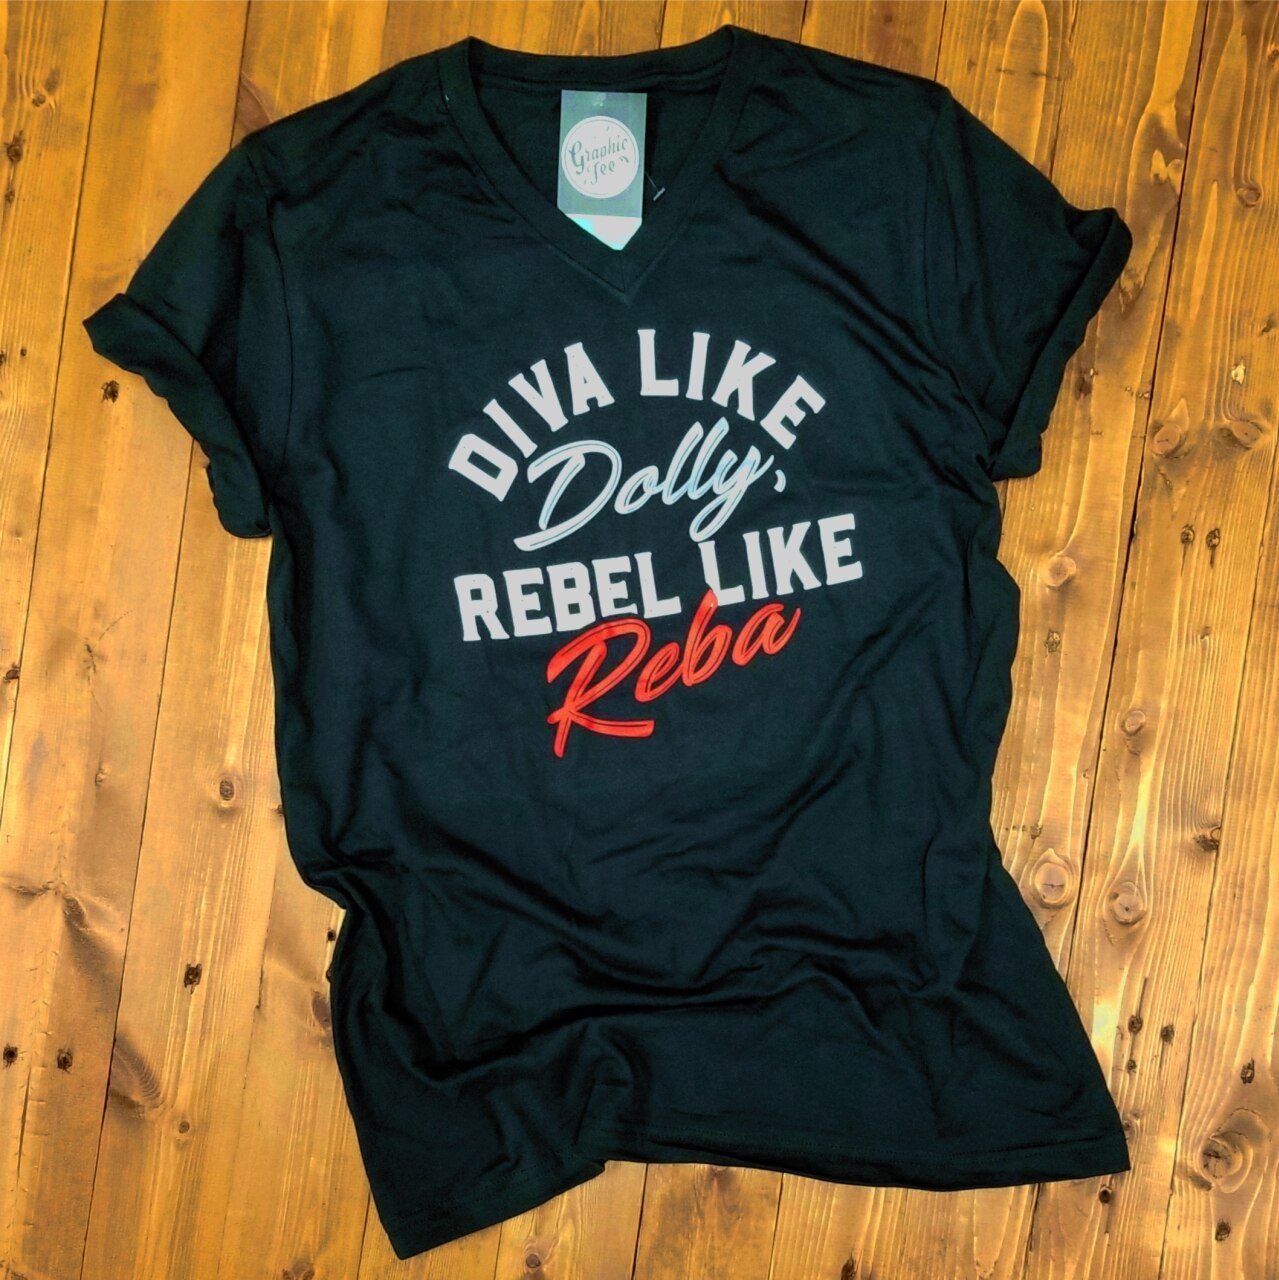 Diva Like Dolly, Rebel Like Reba - Vintage Black Tee - The Graphic Tee